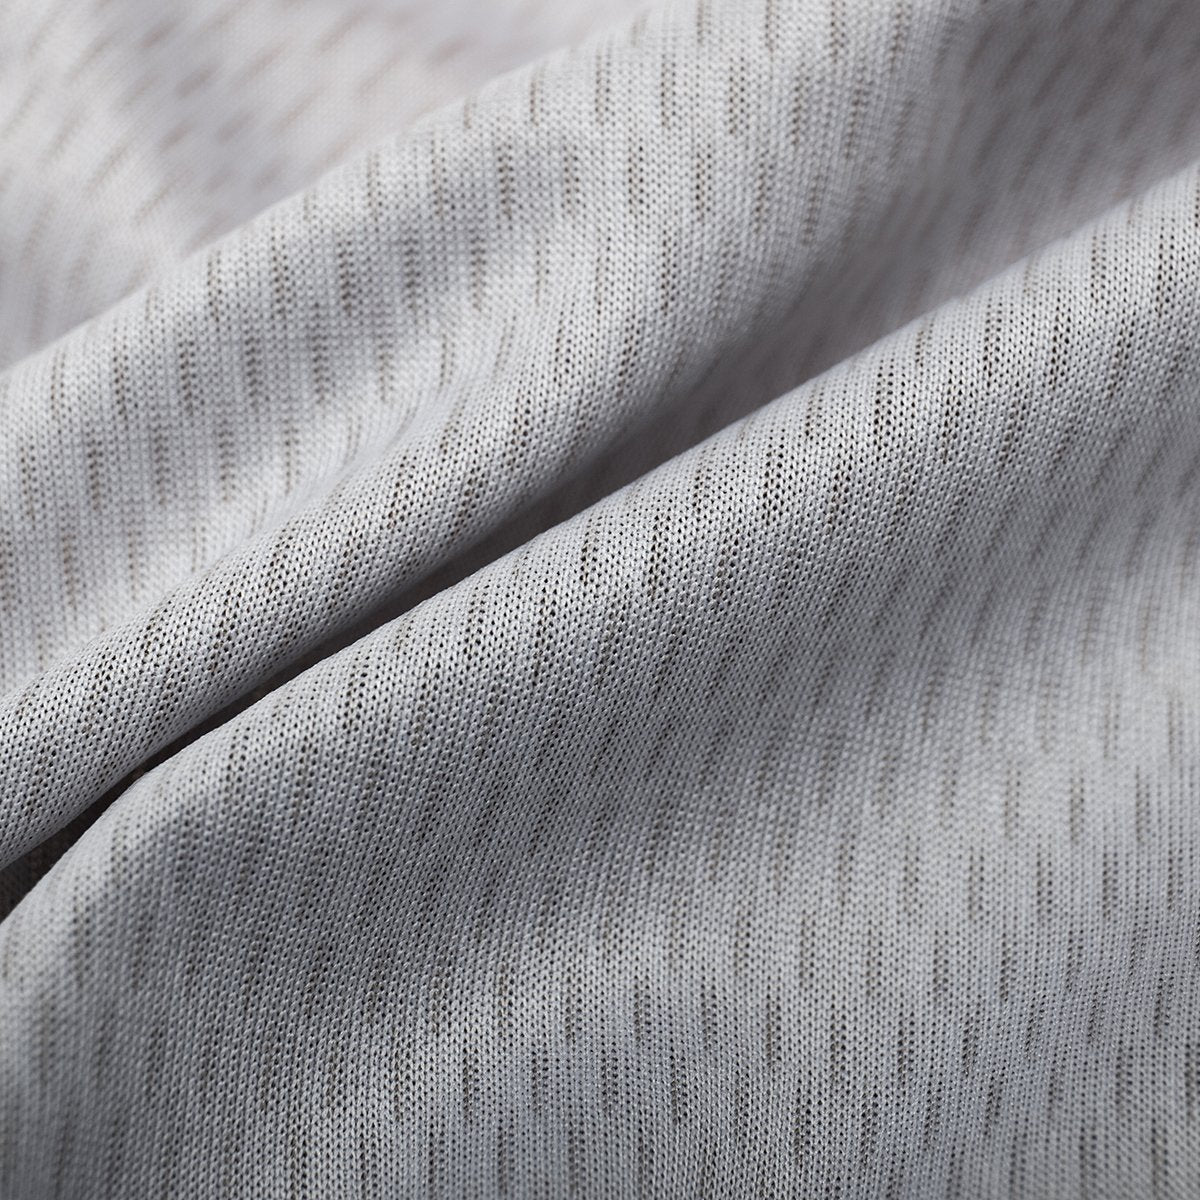 Fabric Close up